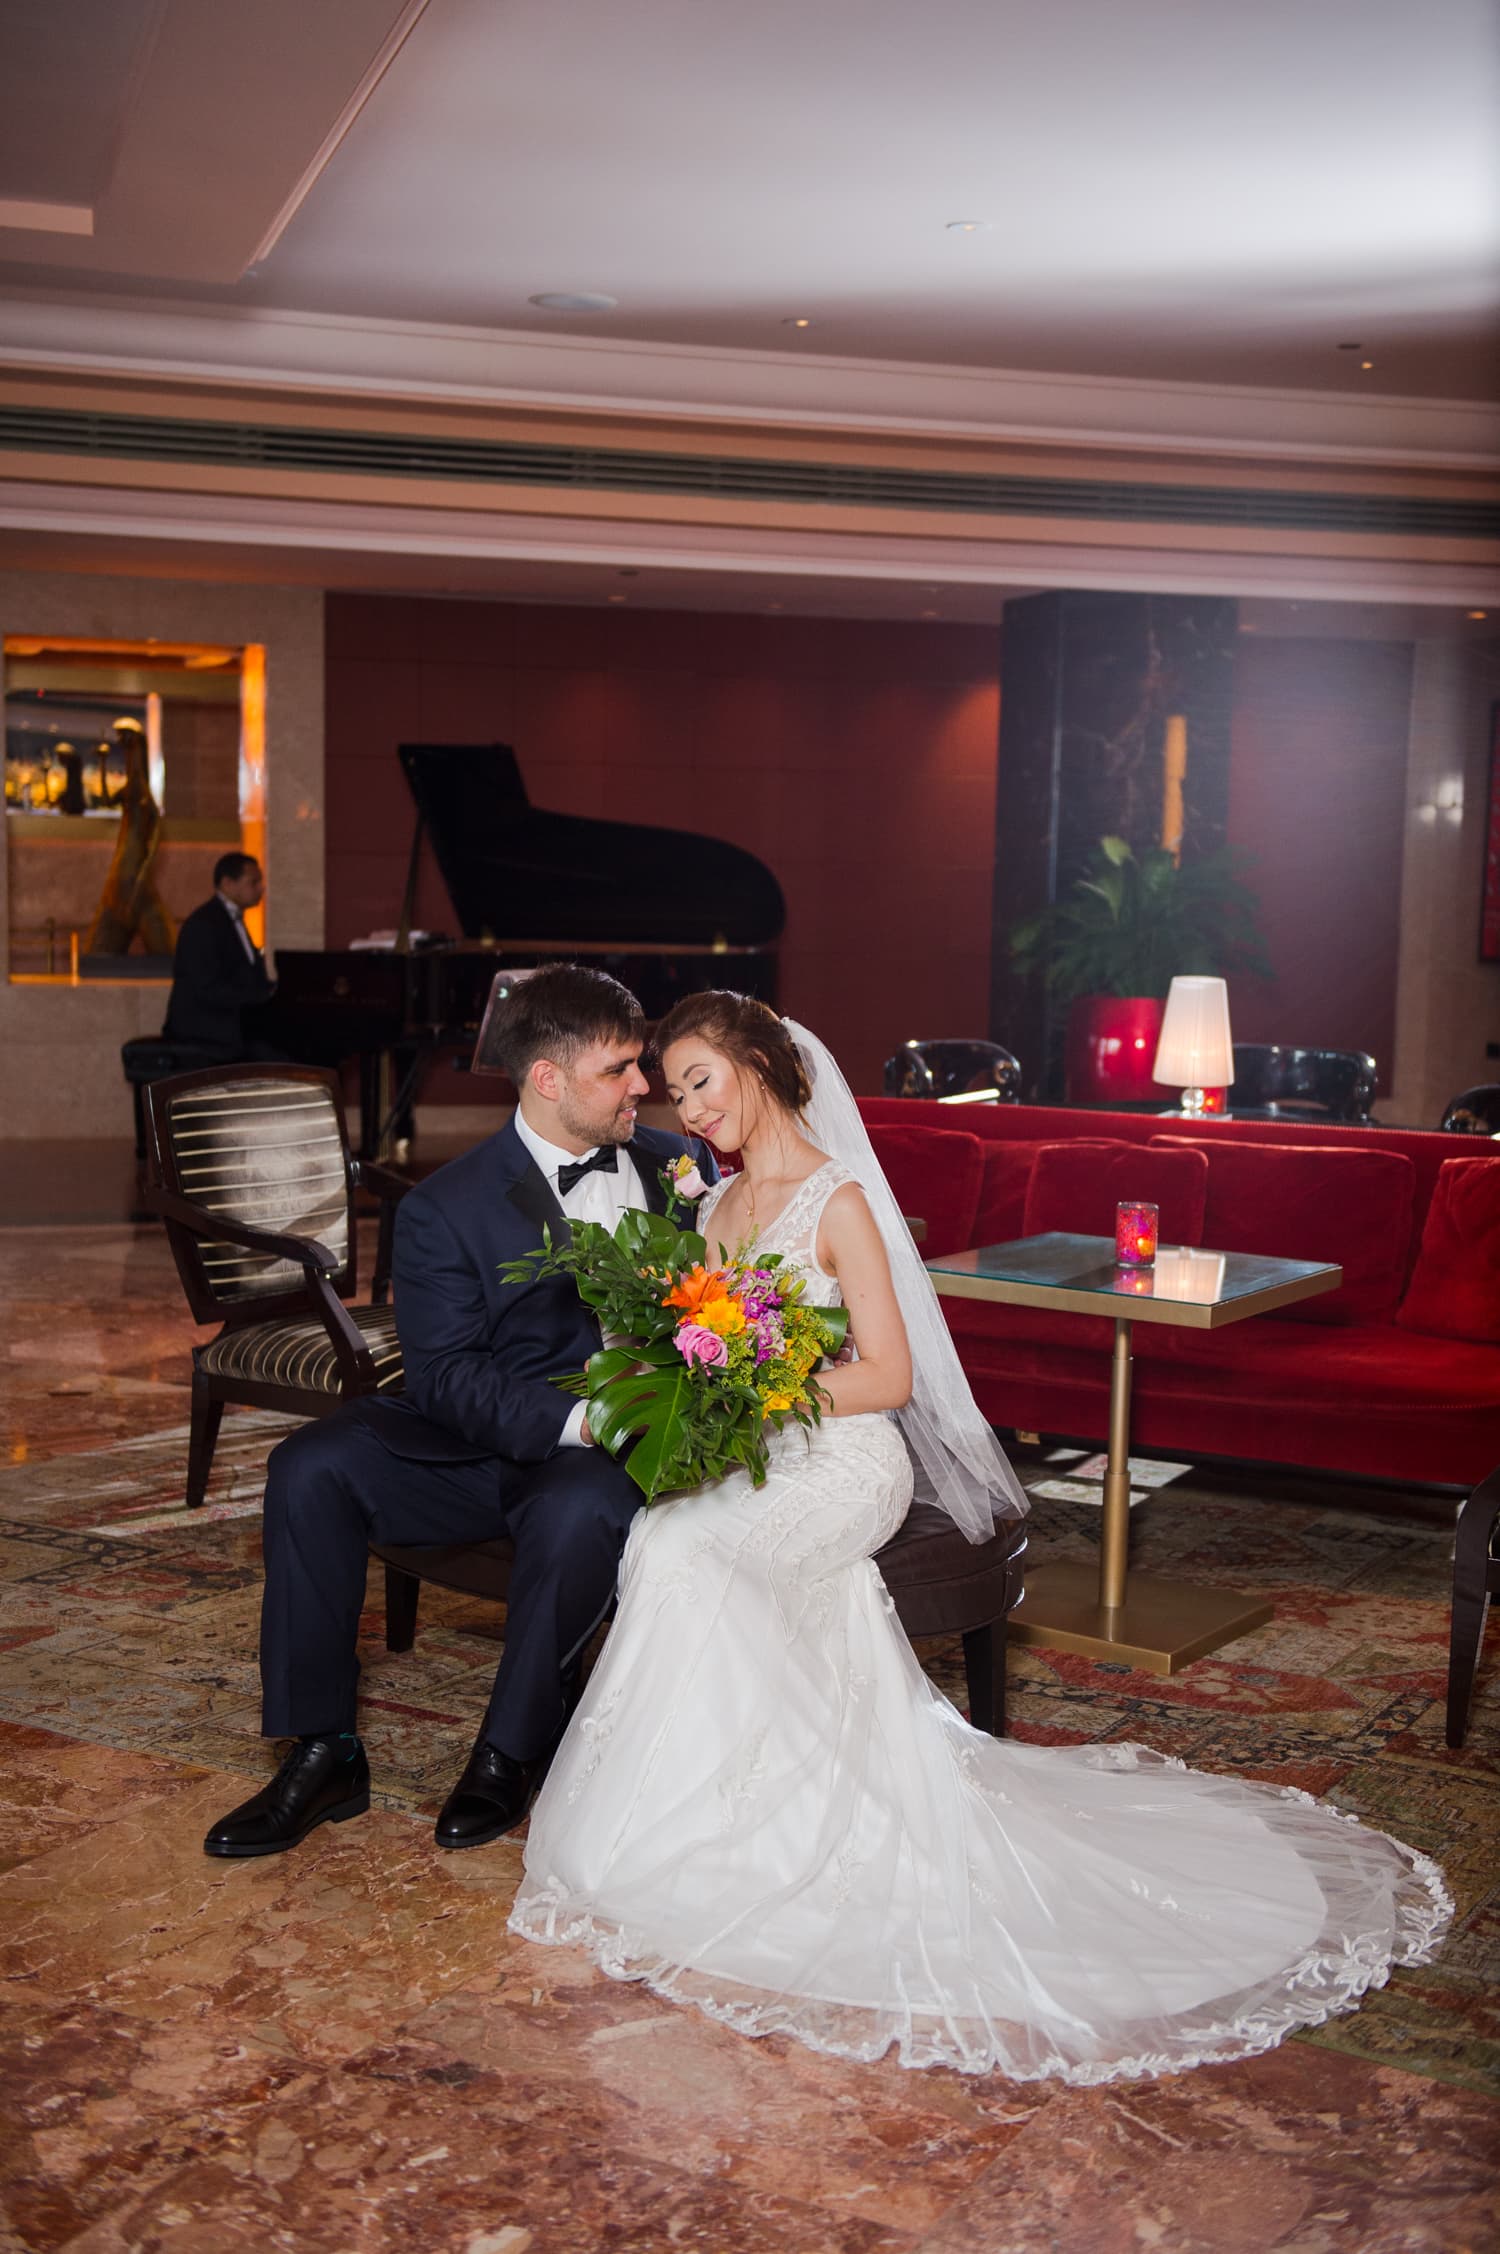 San Juan Destination wedding at Condado Vanderbilt Hotel by Puerto Rico photographer Camille Fontanez